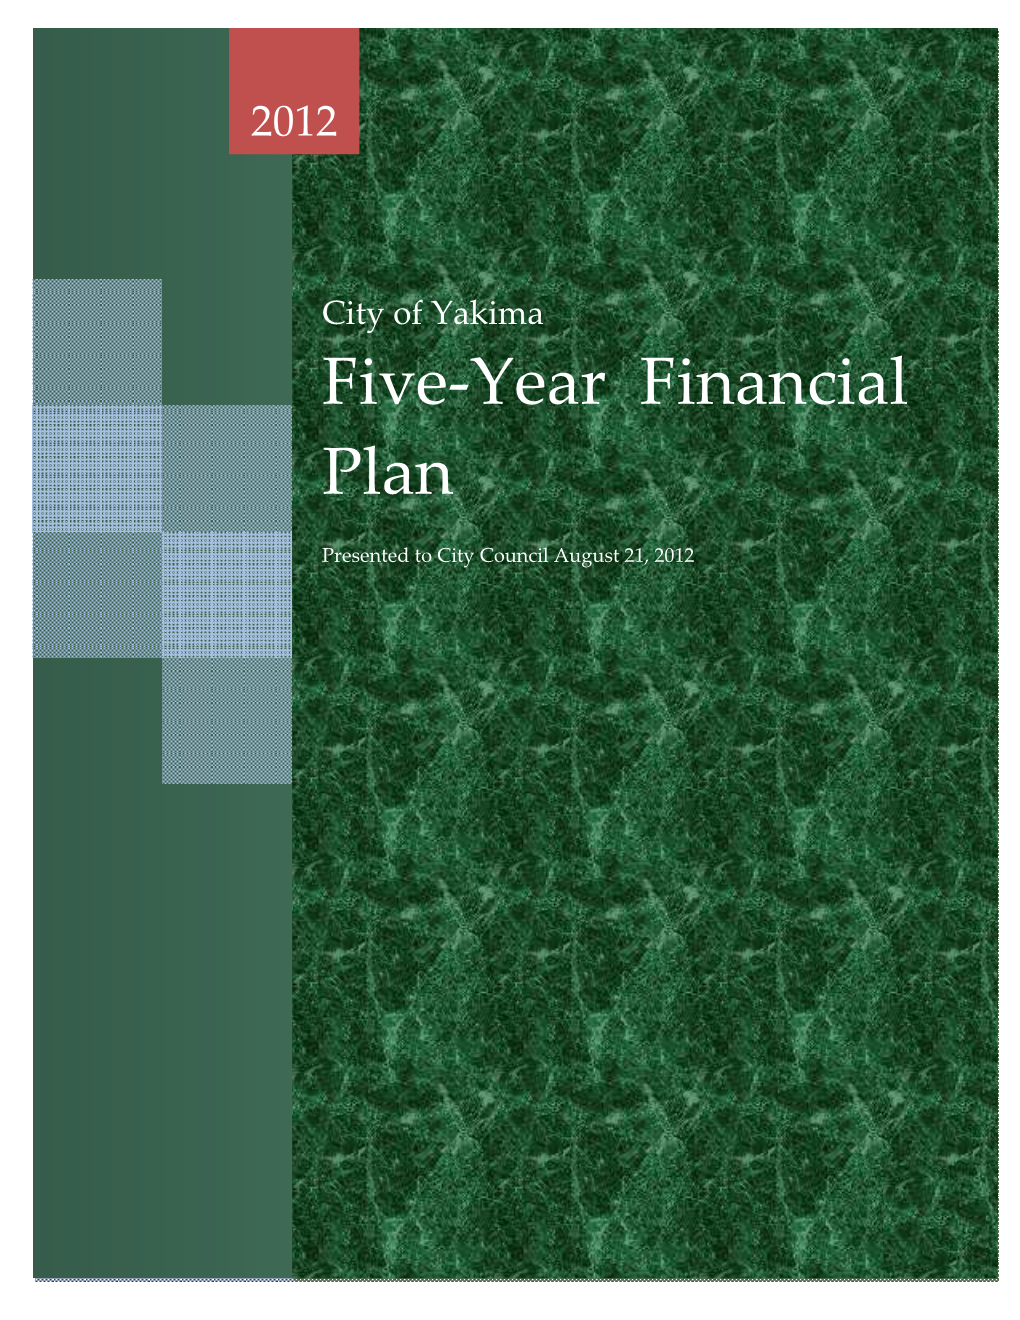 Five-Year Financial Plan